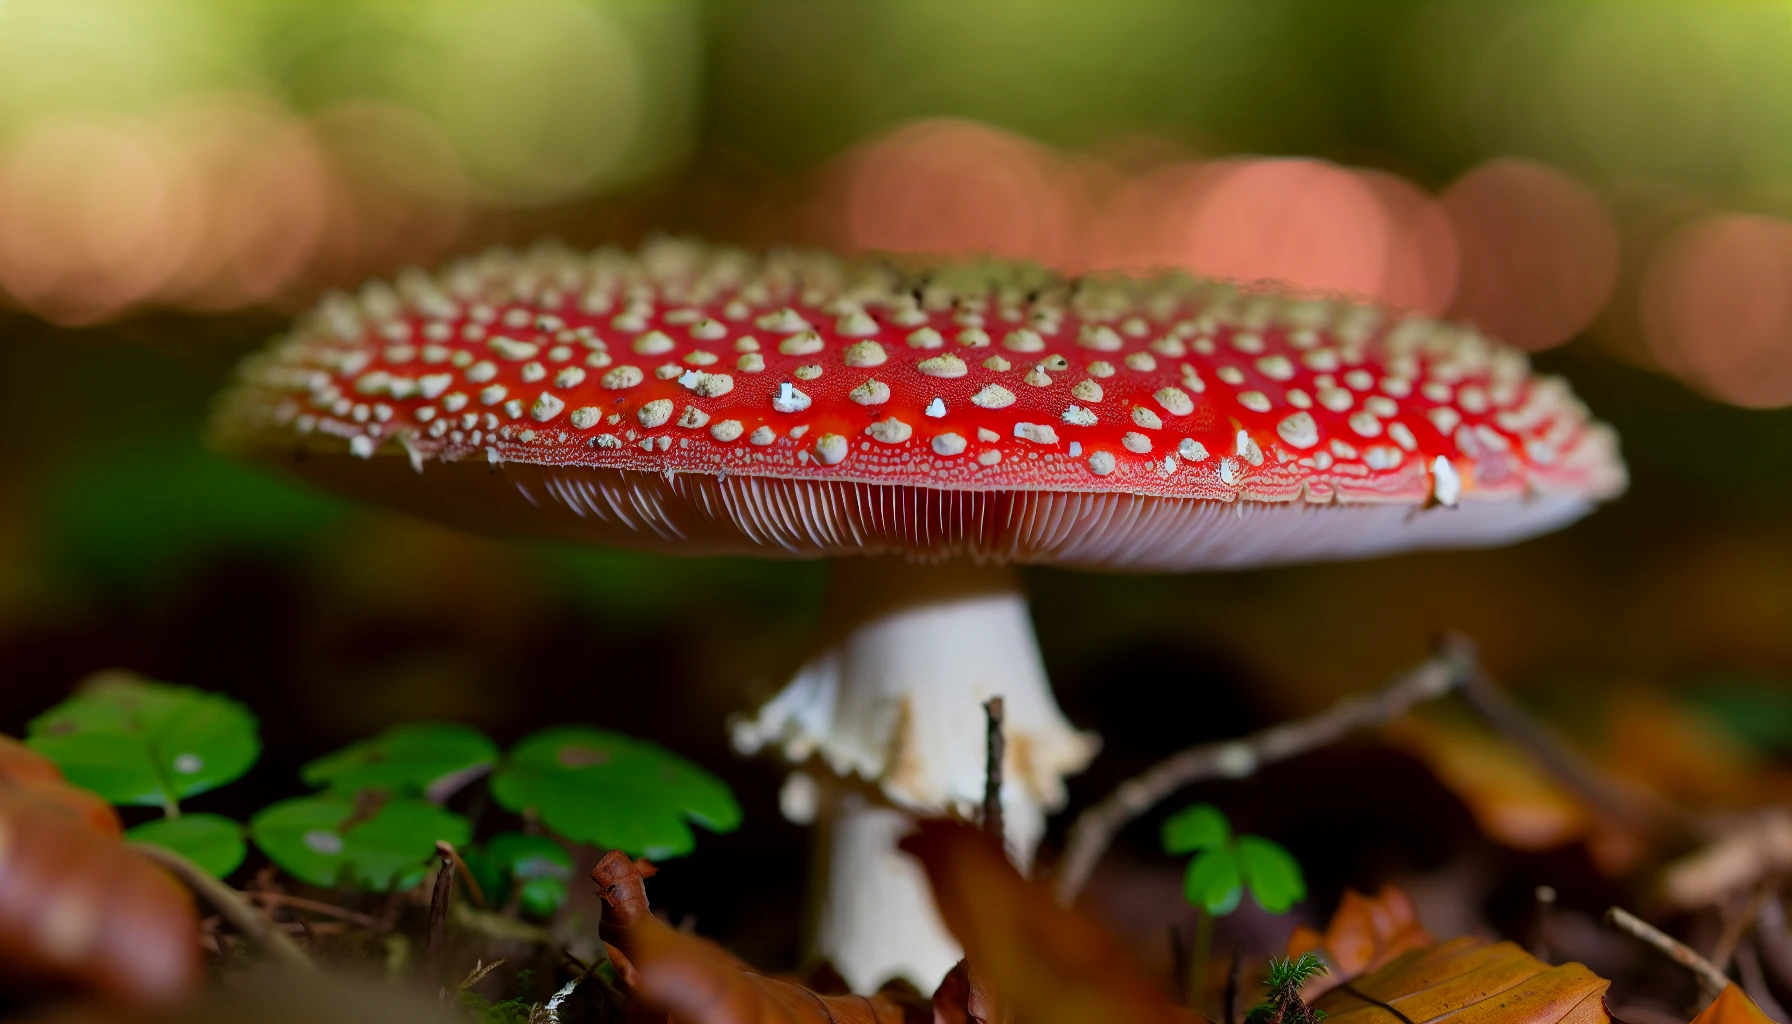 Amanita Muscaria mushroom close-up